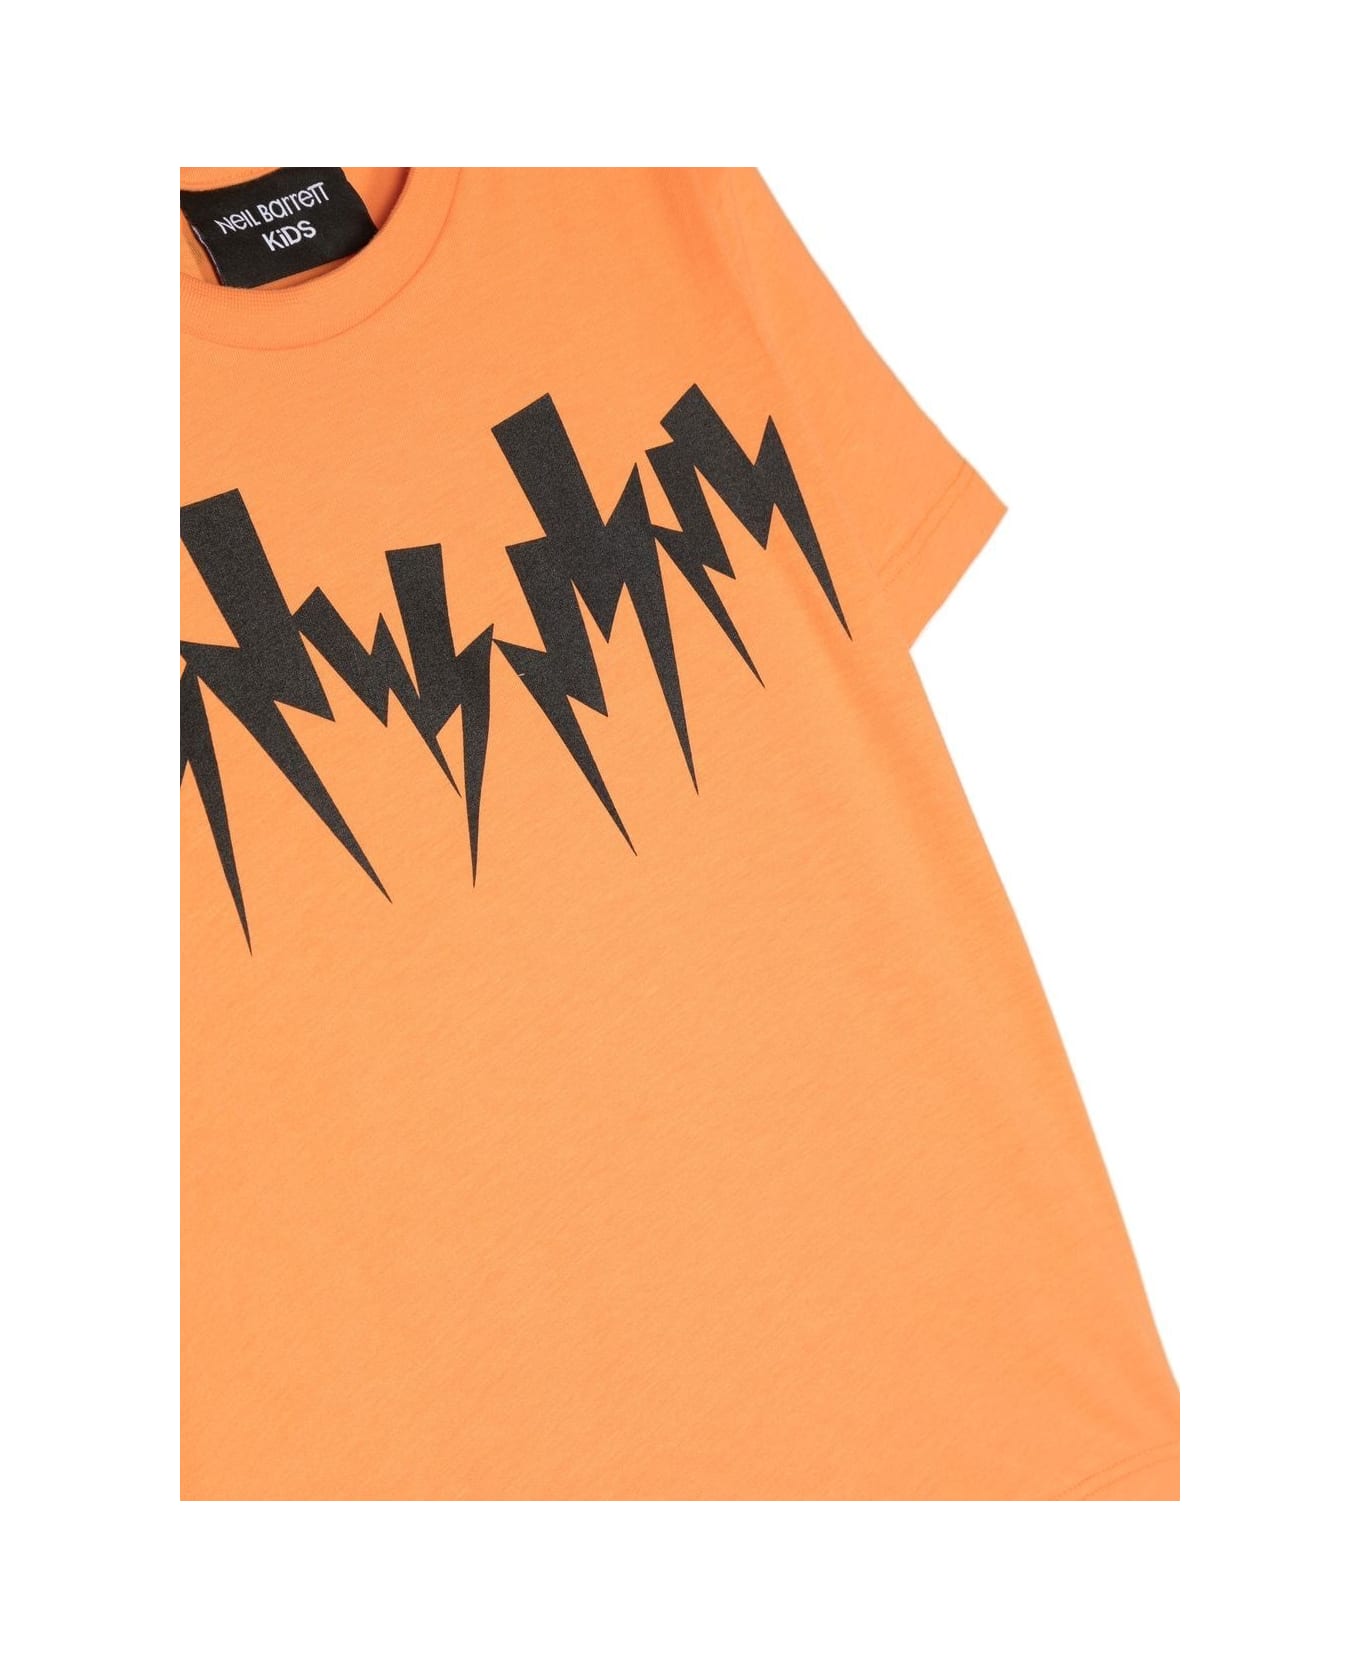 Neil Barrett T-shirt With Print - Orange